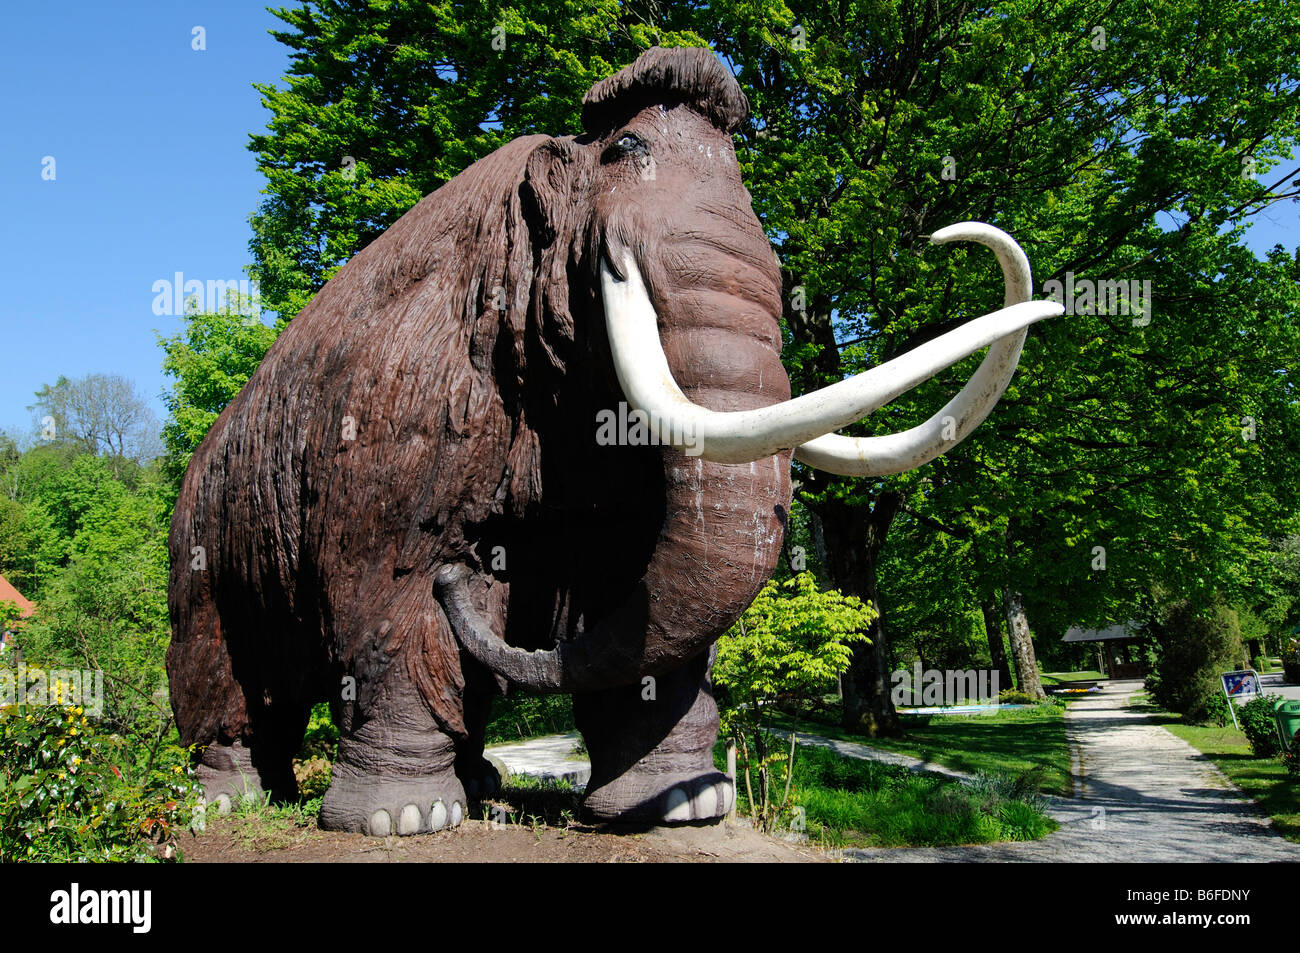 Woolly Mammoth figure, life size, Siegsdorf, Chiemgau, Bavaria, Germany, Europe Stock Photo